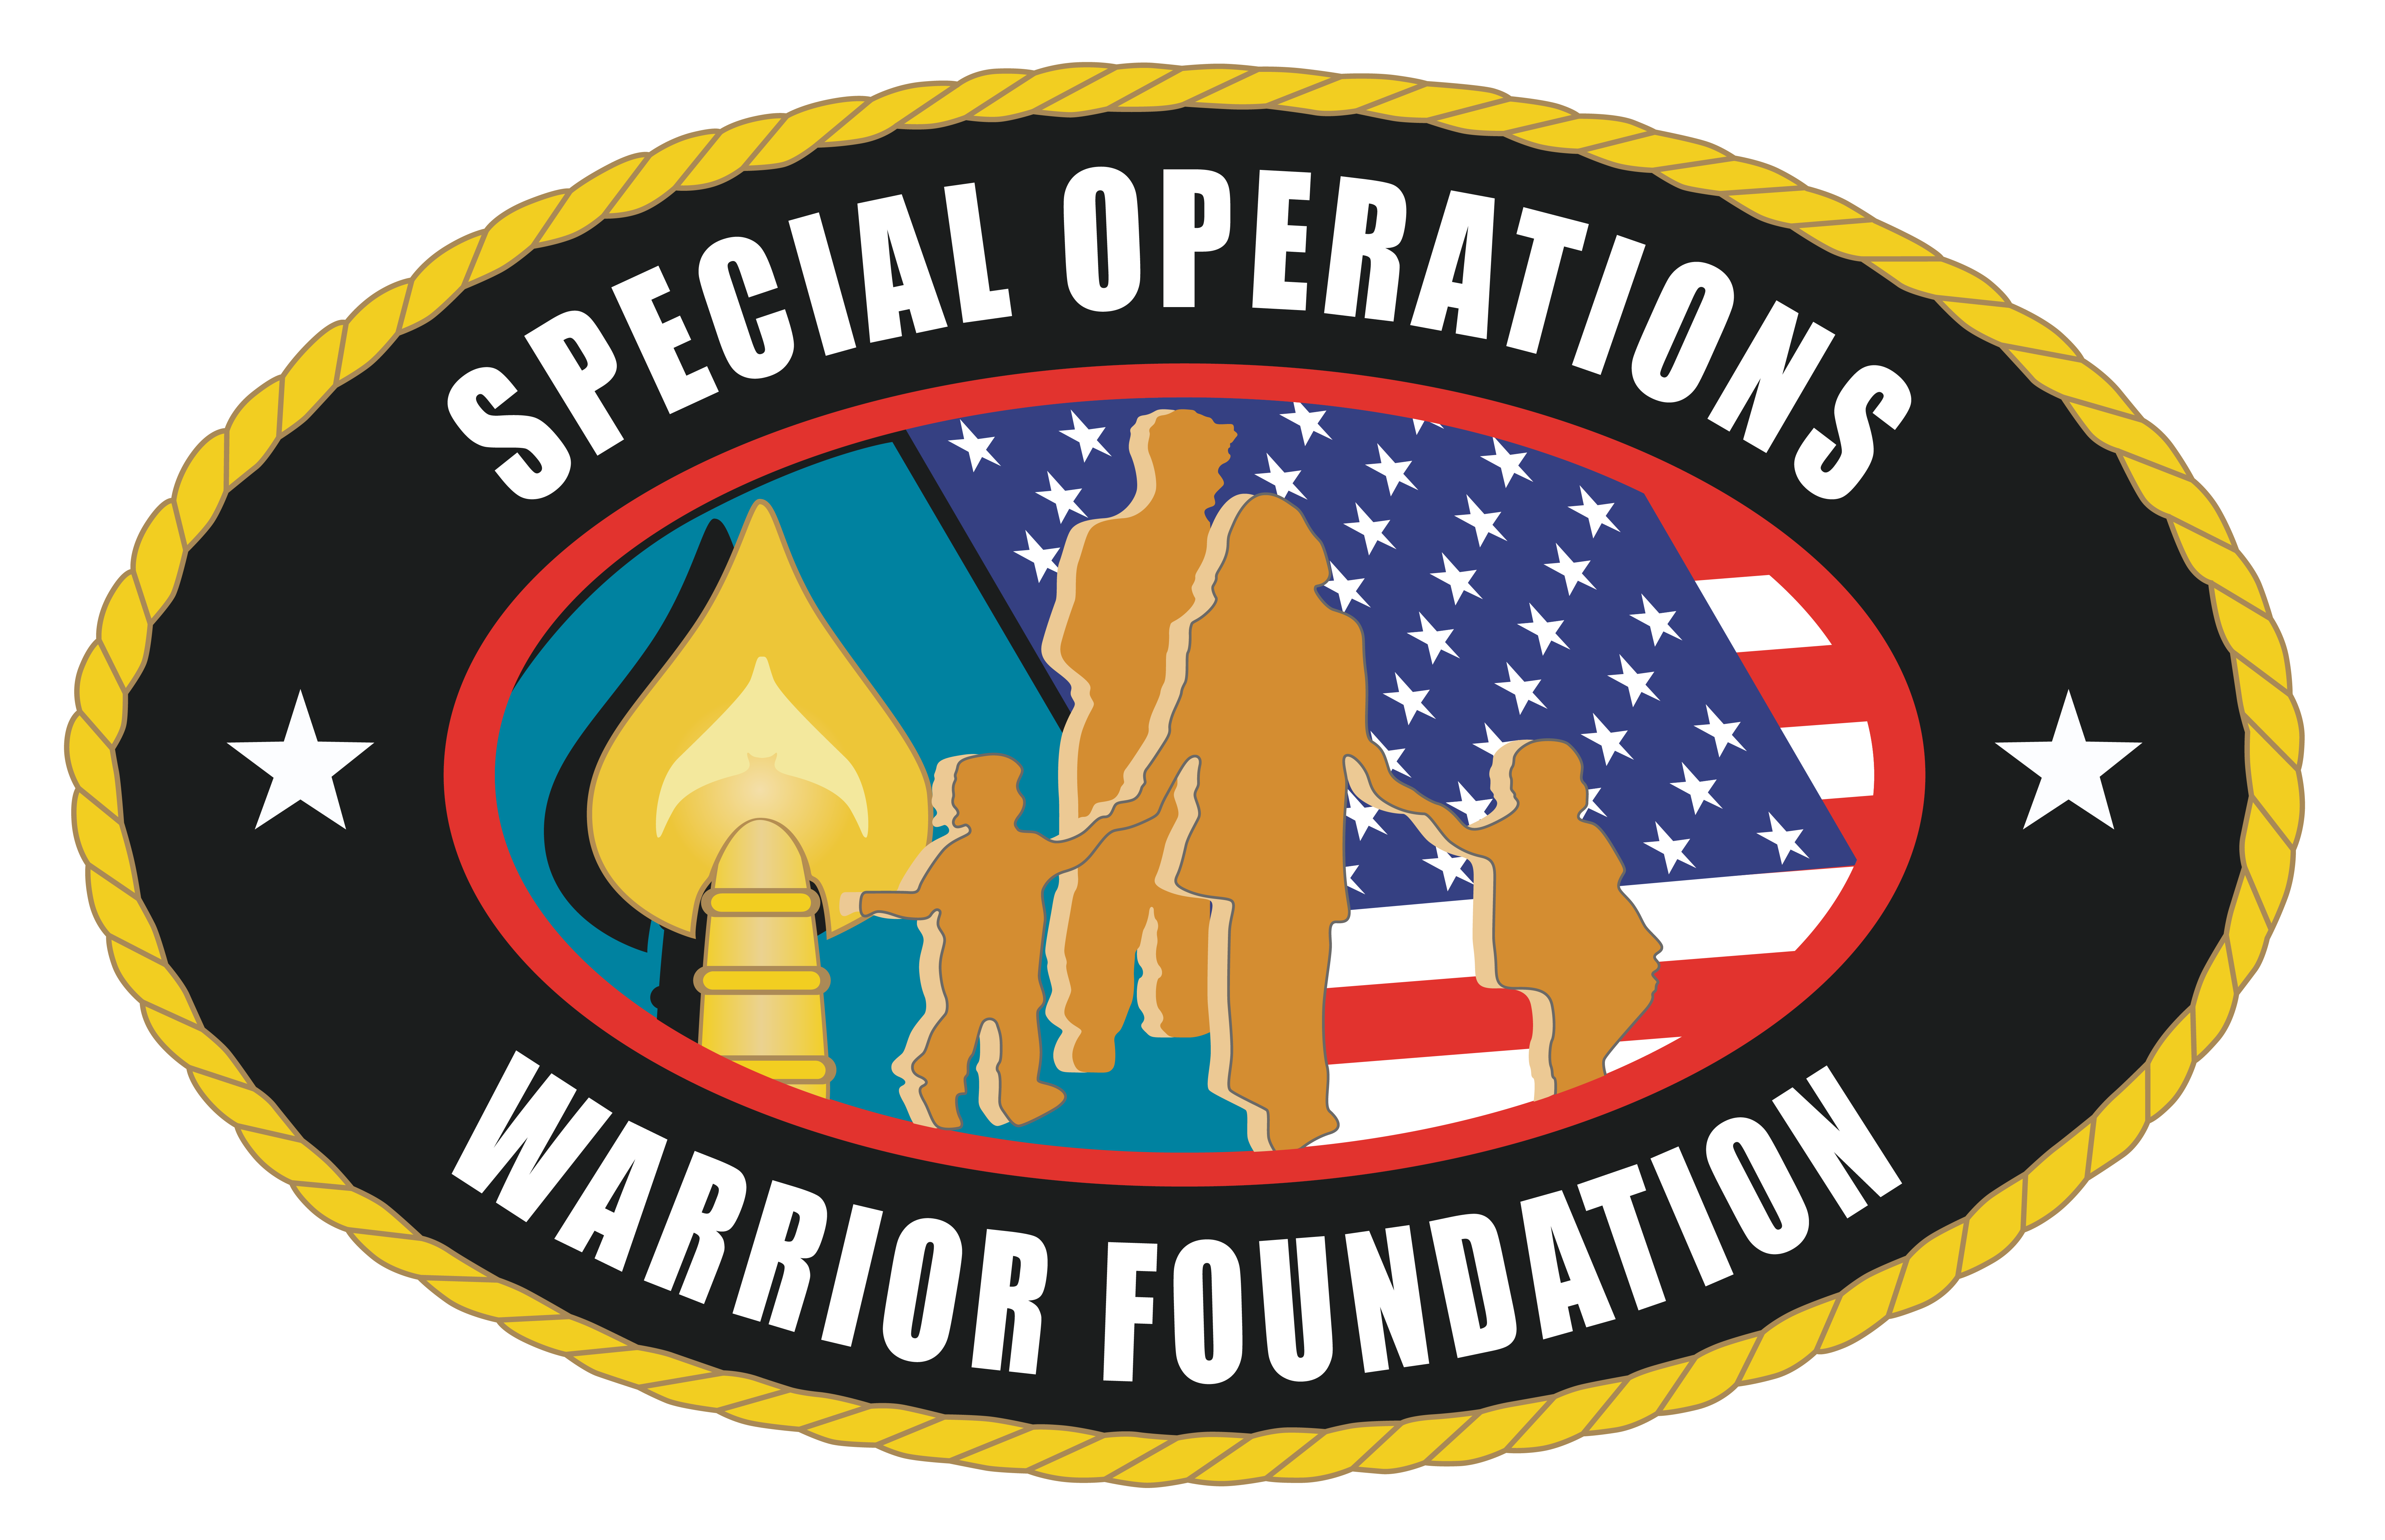 Company Logo For Special Operations Warrior Foundation'